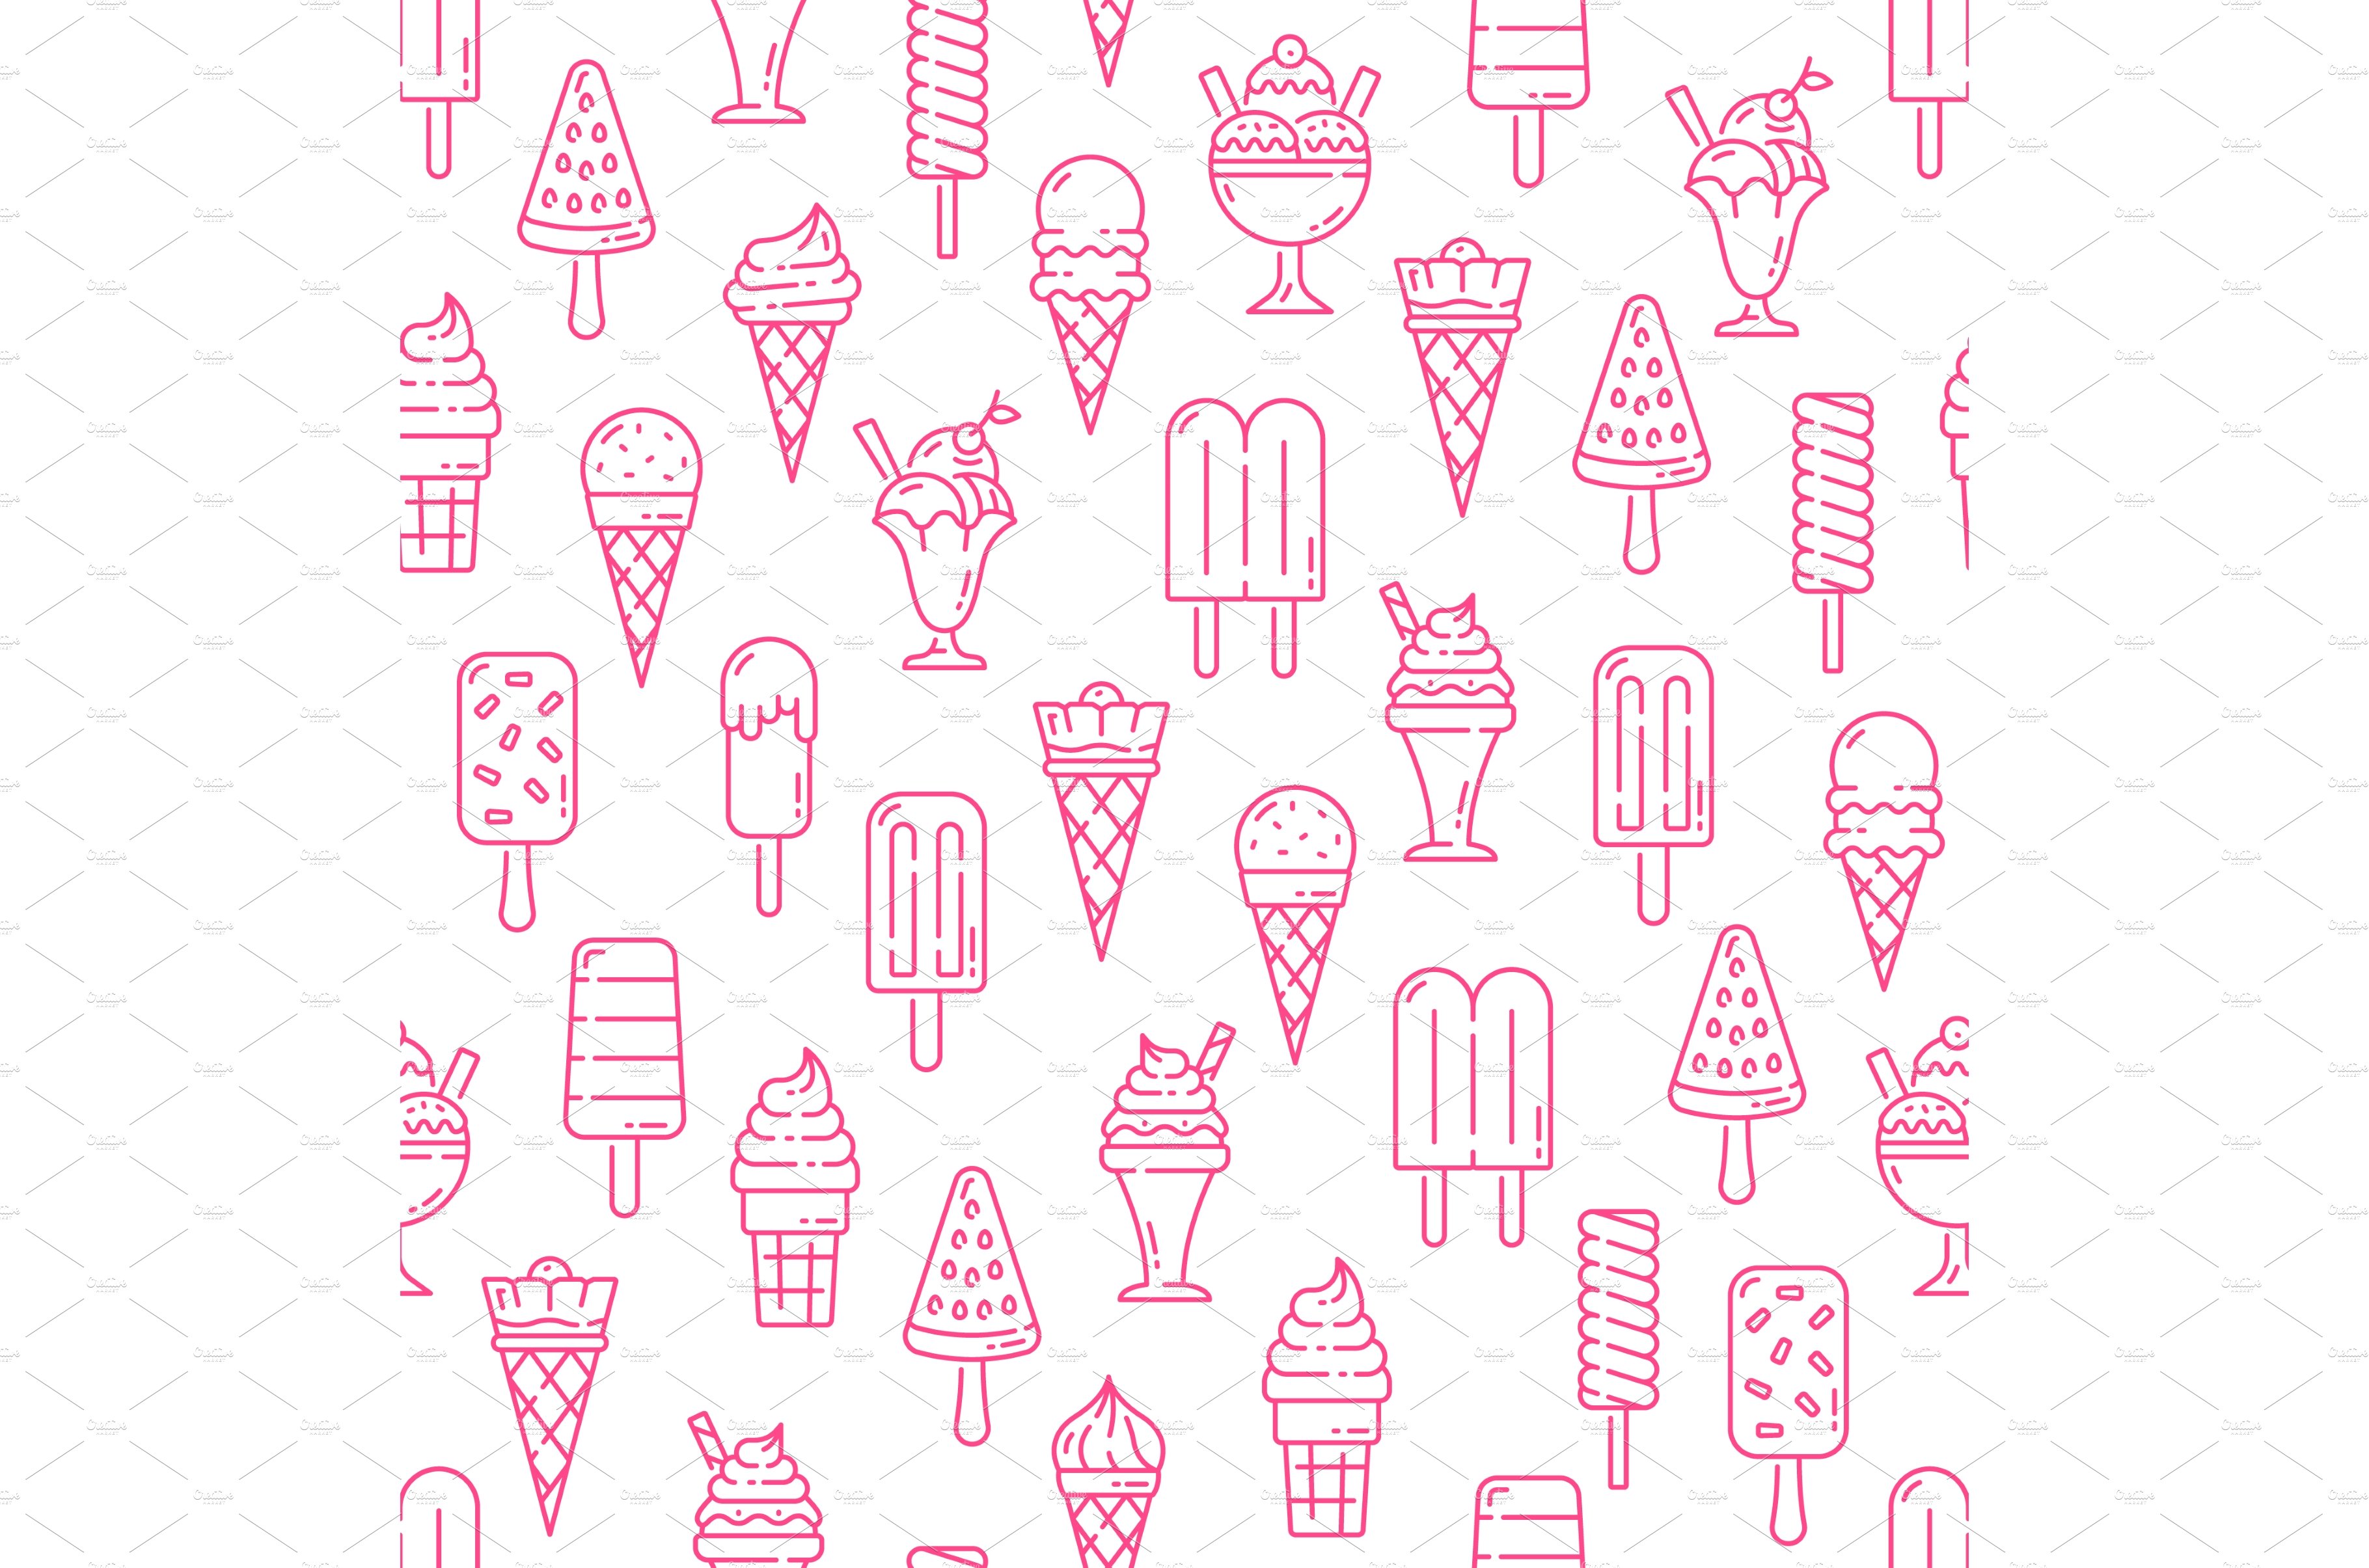 Ice cream frozen sundae pattern cover image.